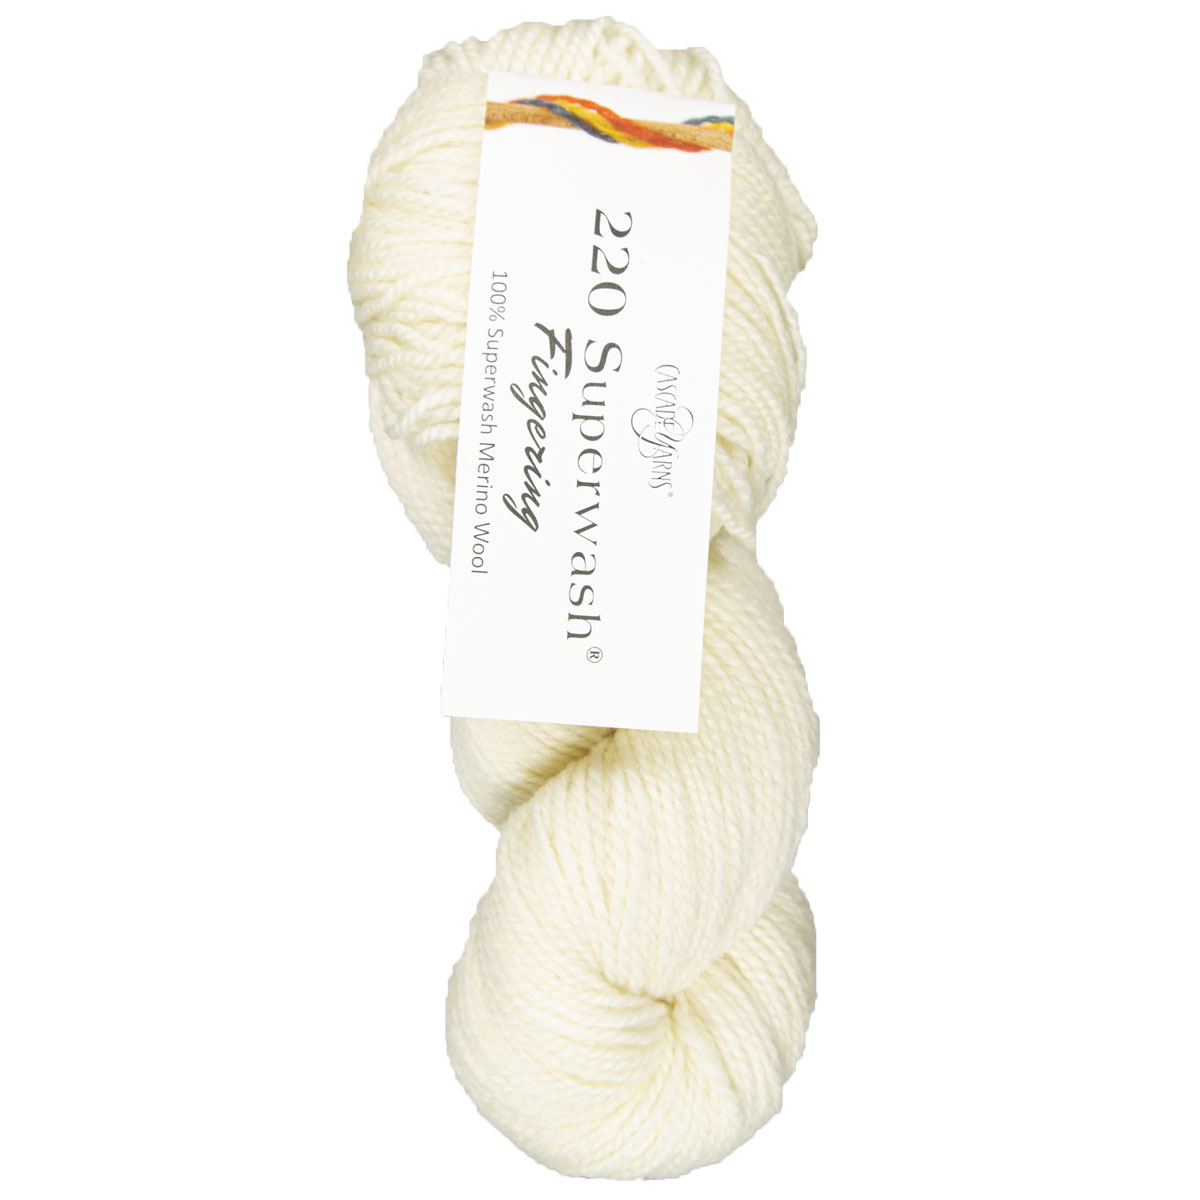 Cascade 220 Superwash Merino Yarn - 090 Pastel Turquoise at Jimmy Beans Wool